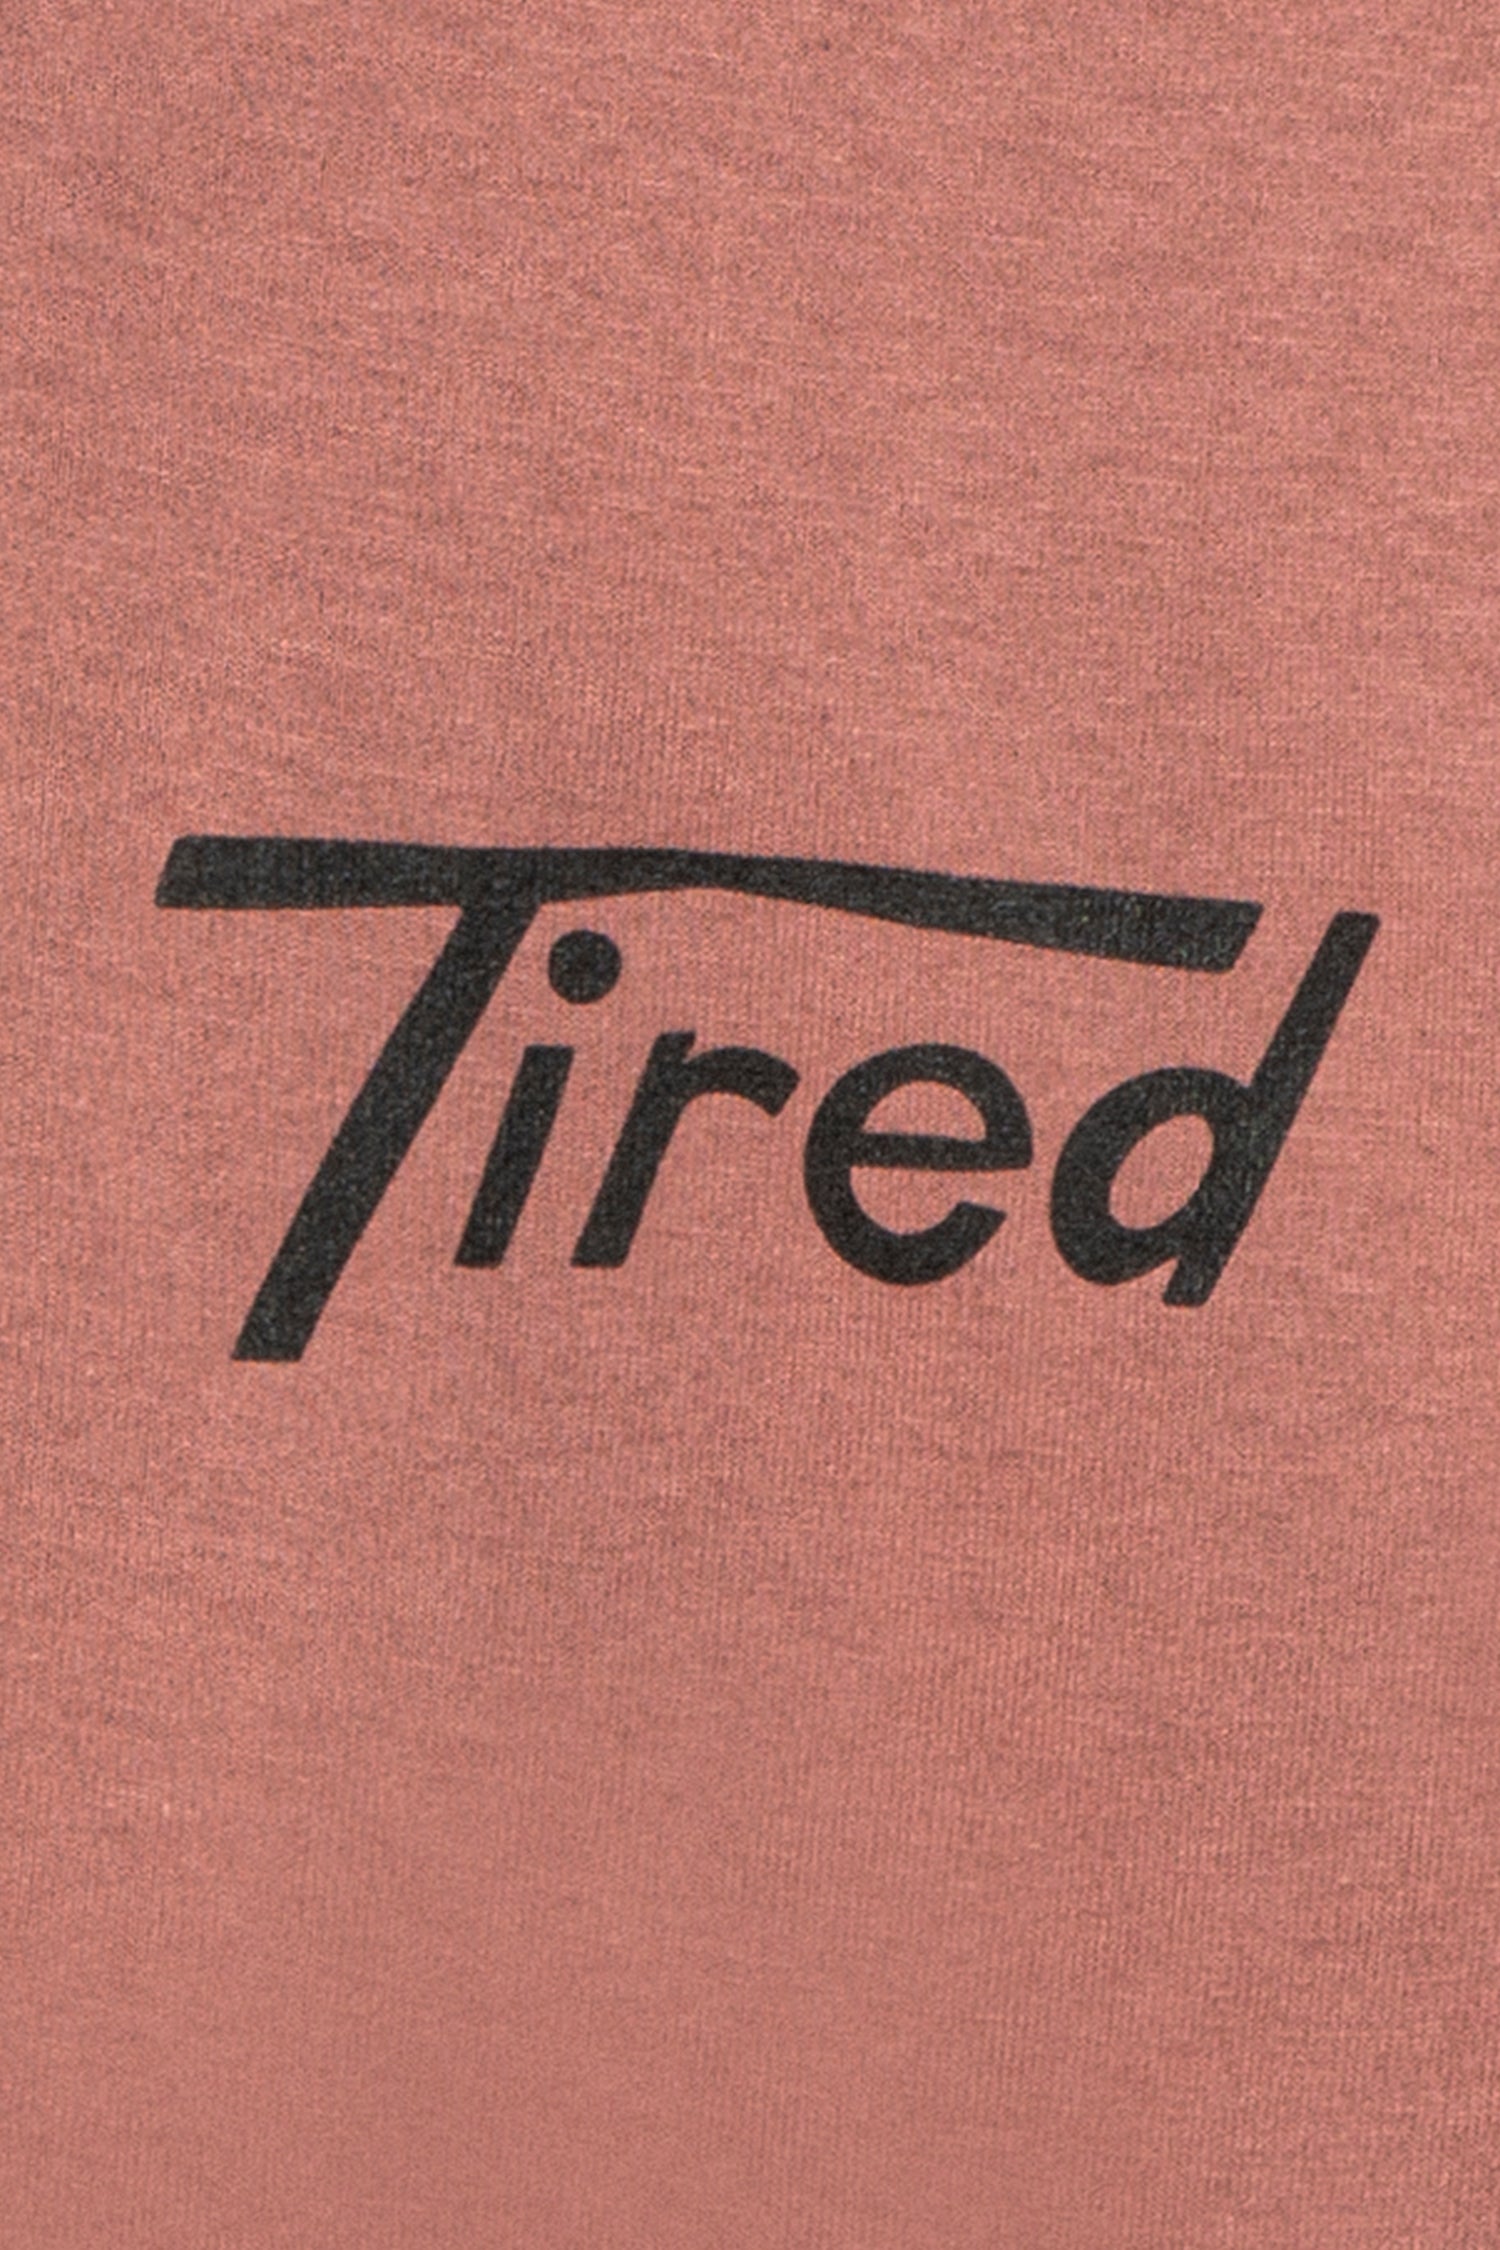 Selectshop FRAME - TIRED Super Tired Tee T-Shirts Dubai